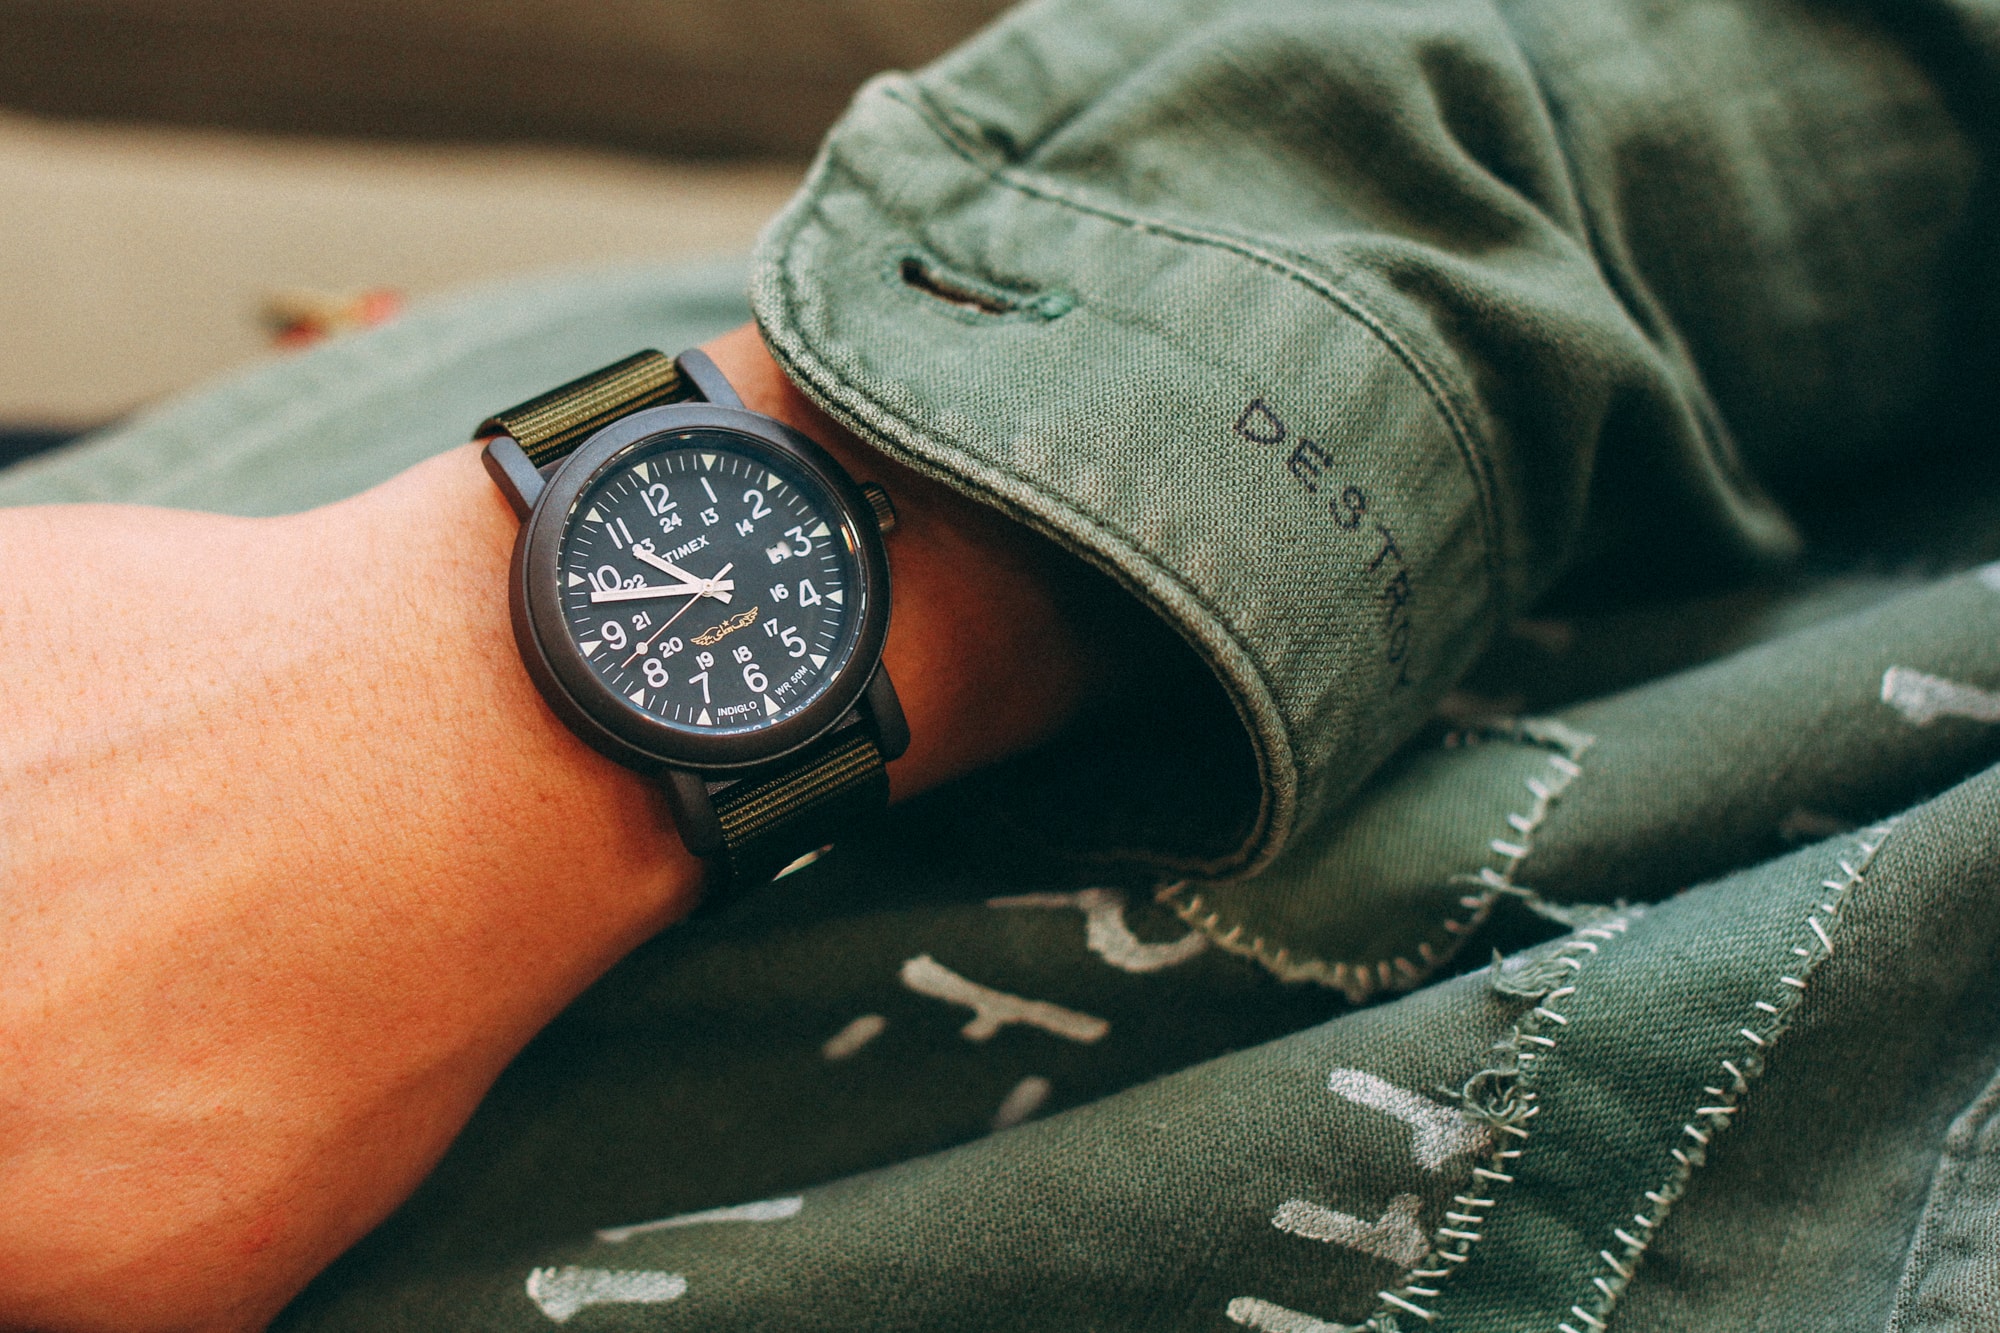 Timex SBTG Surplus Military Watch Collaboration